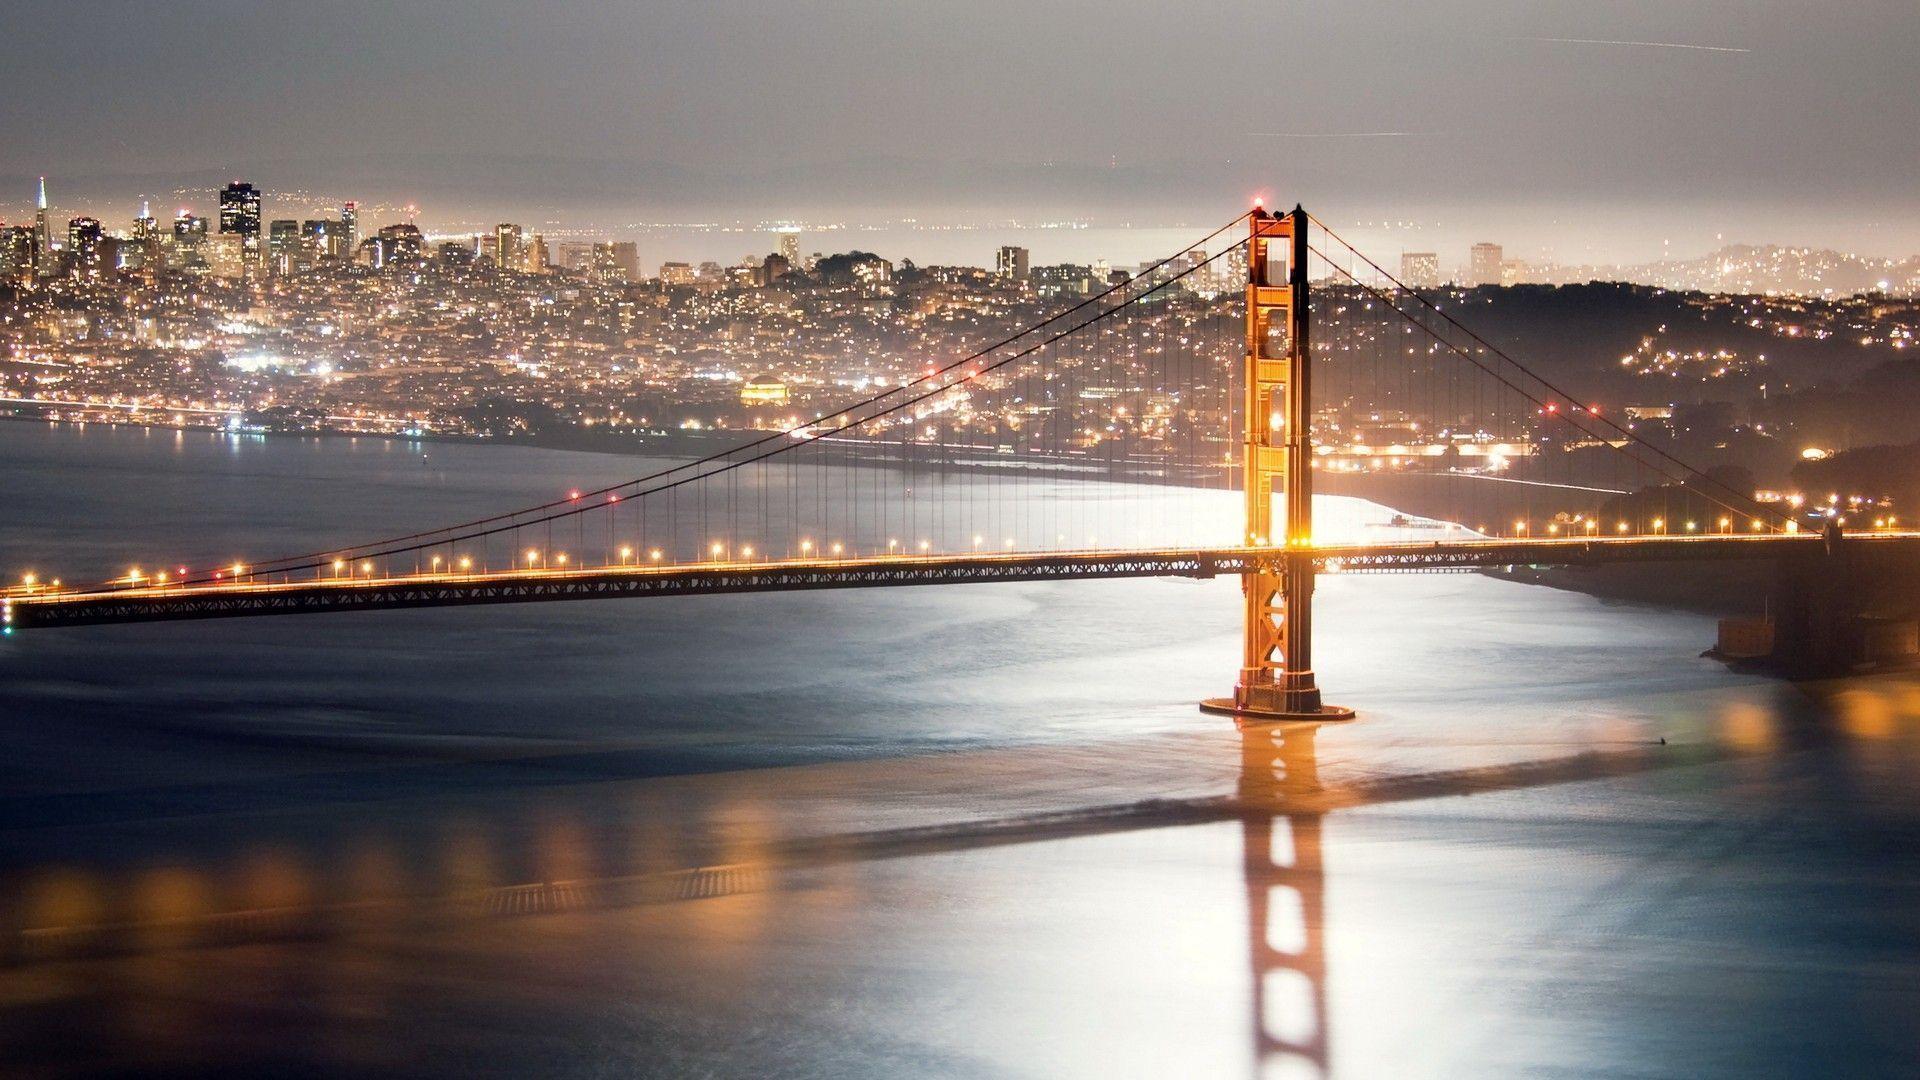 Architecture Golden Gate Bridge San Francisco city skyline cities